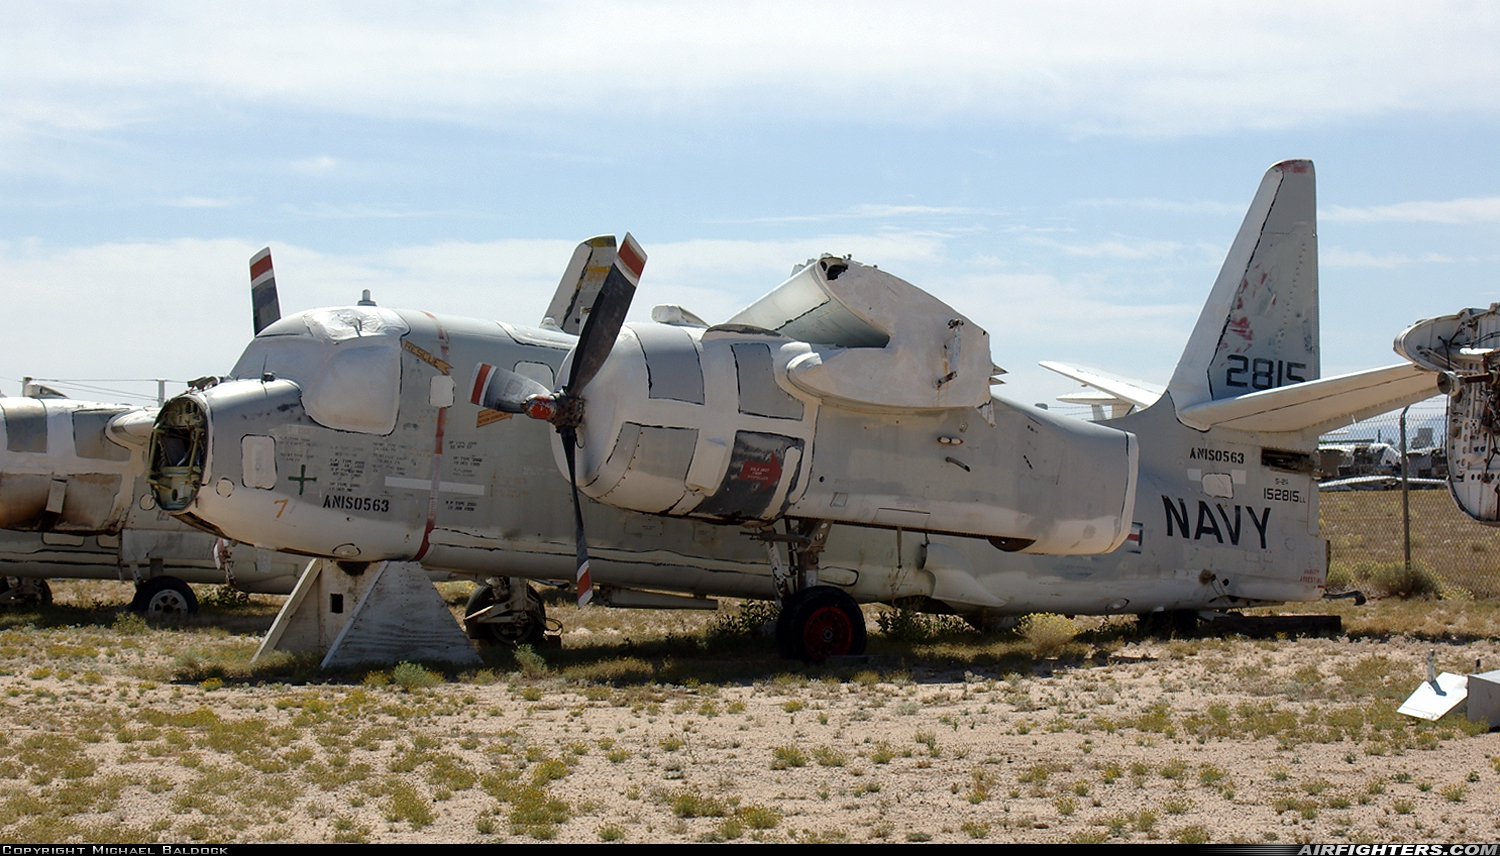 USA - Navy Grumman S-2G Tracker (G-121) 152815 at Tucson - Davis-Monthan AFB (DMA / KDMA), USA